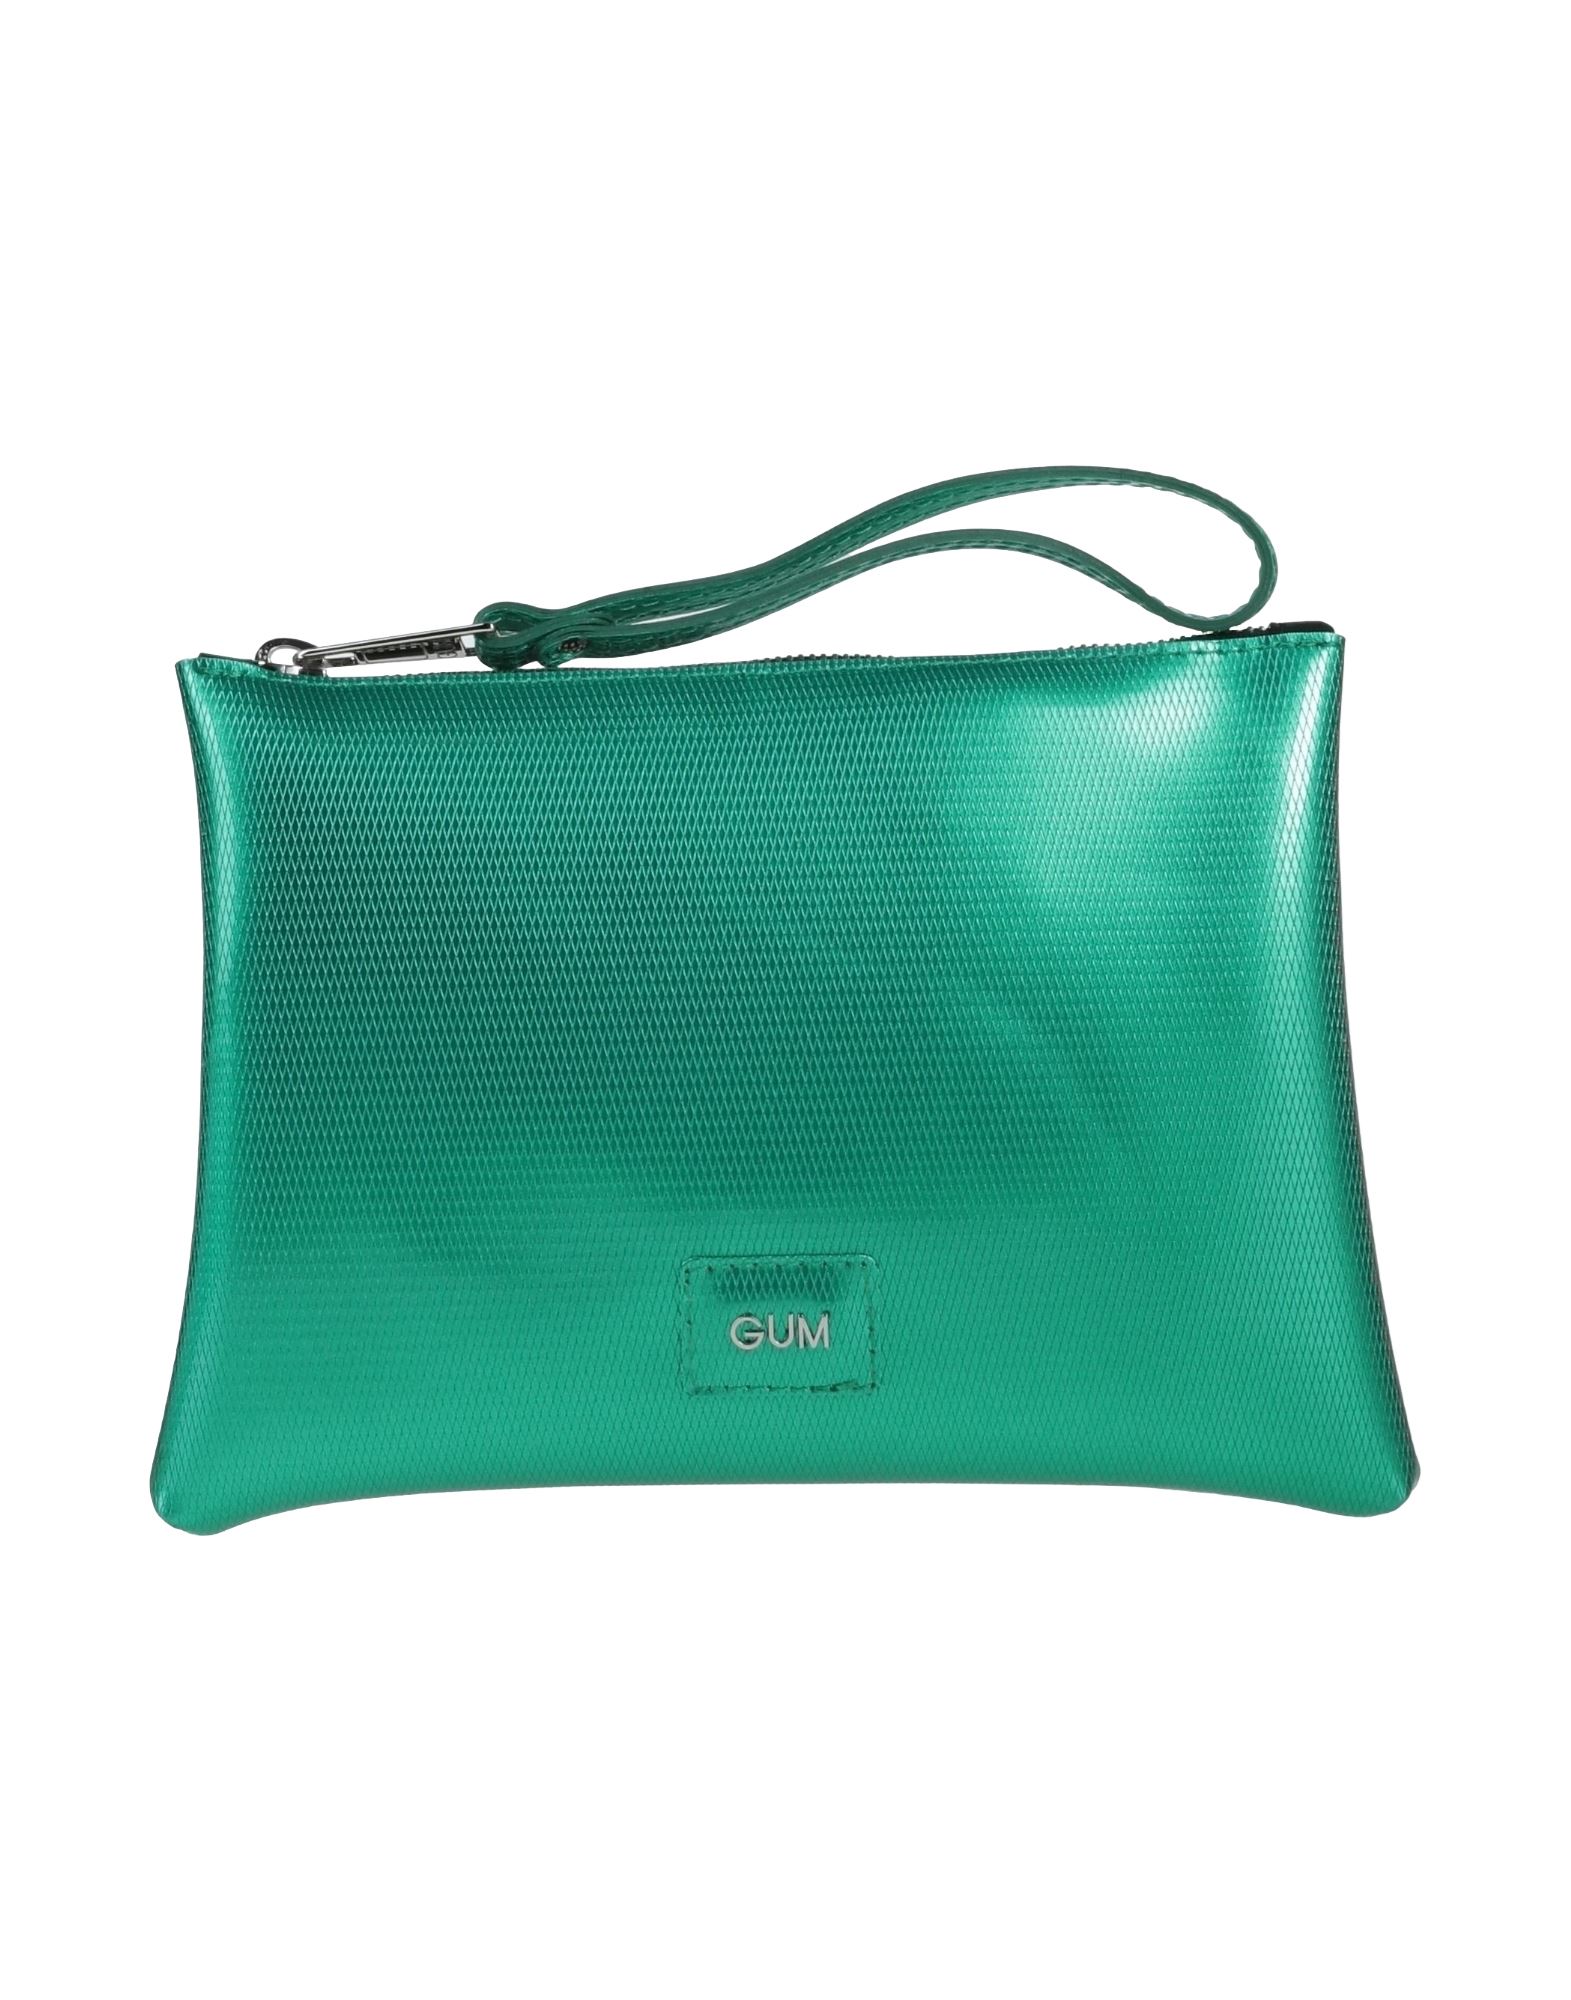 Gum Design Handbags In Green